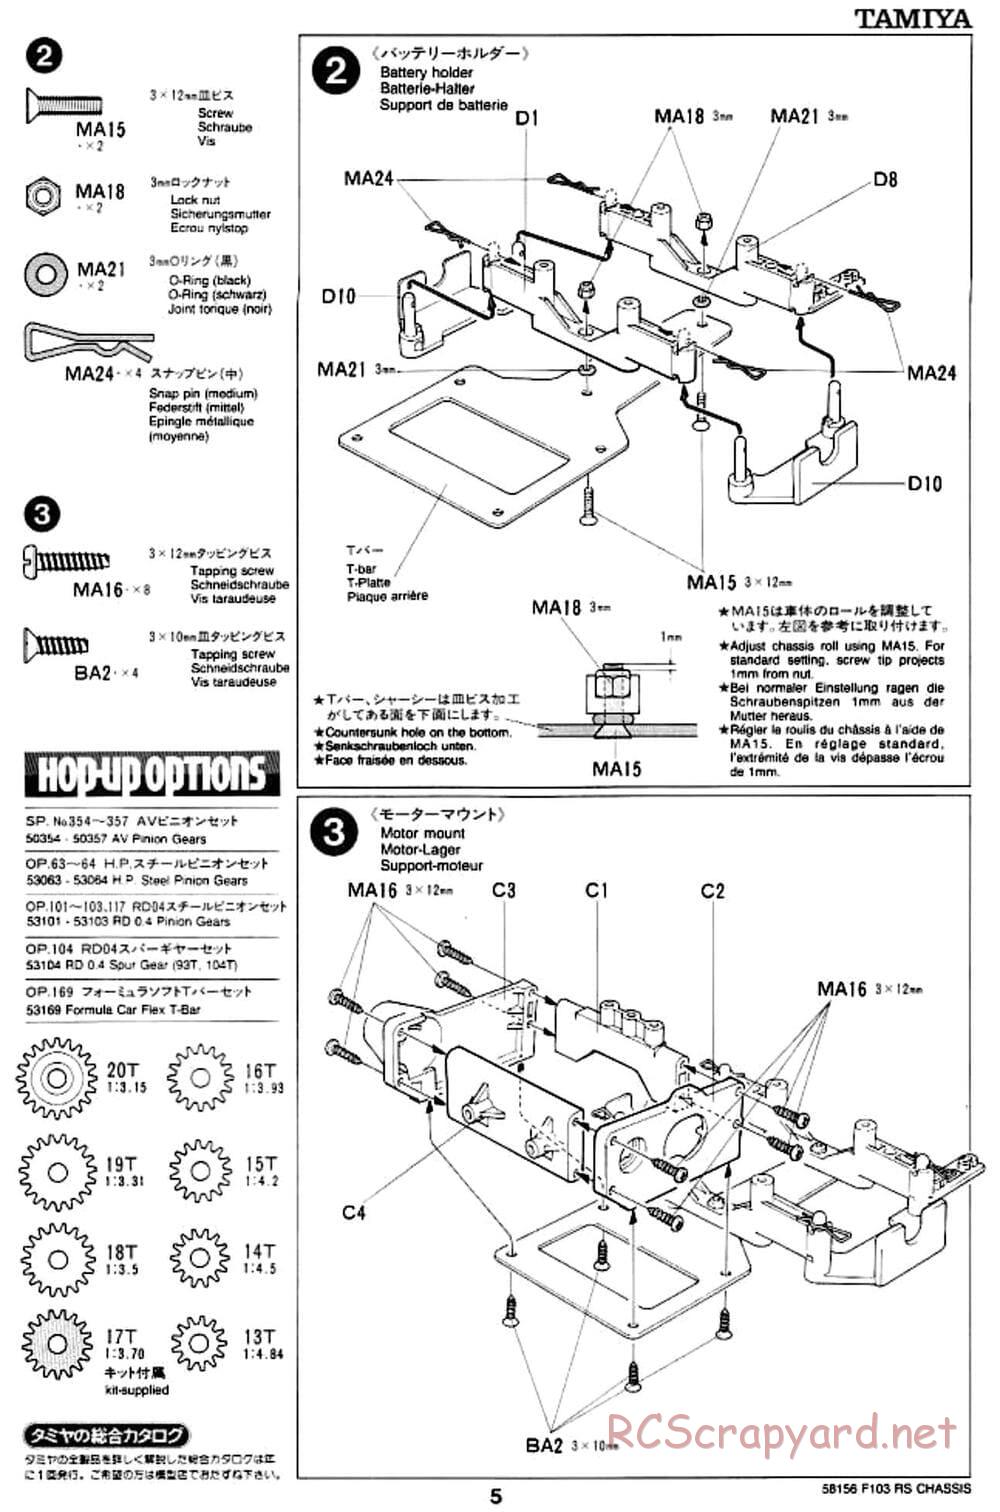 Tamiya - F103RS Chassis - Manual - Page 5